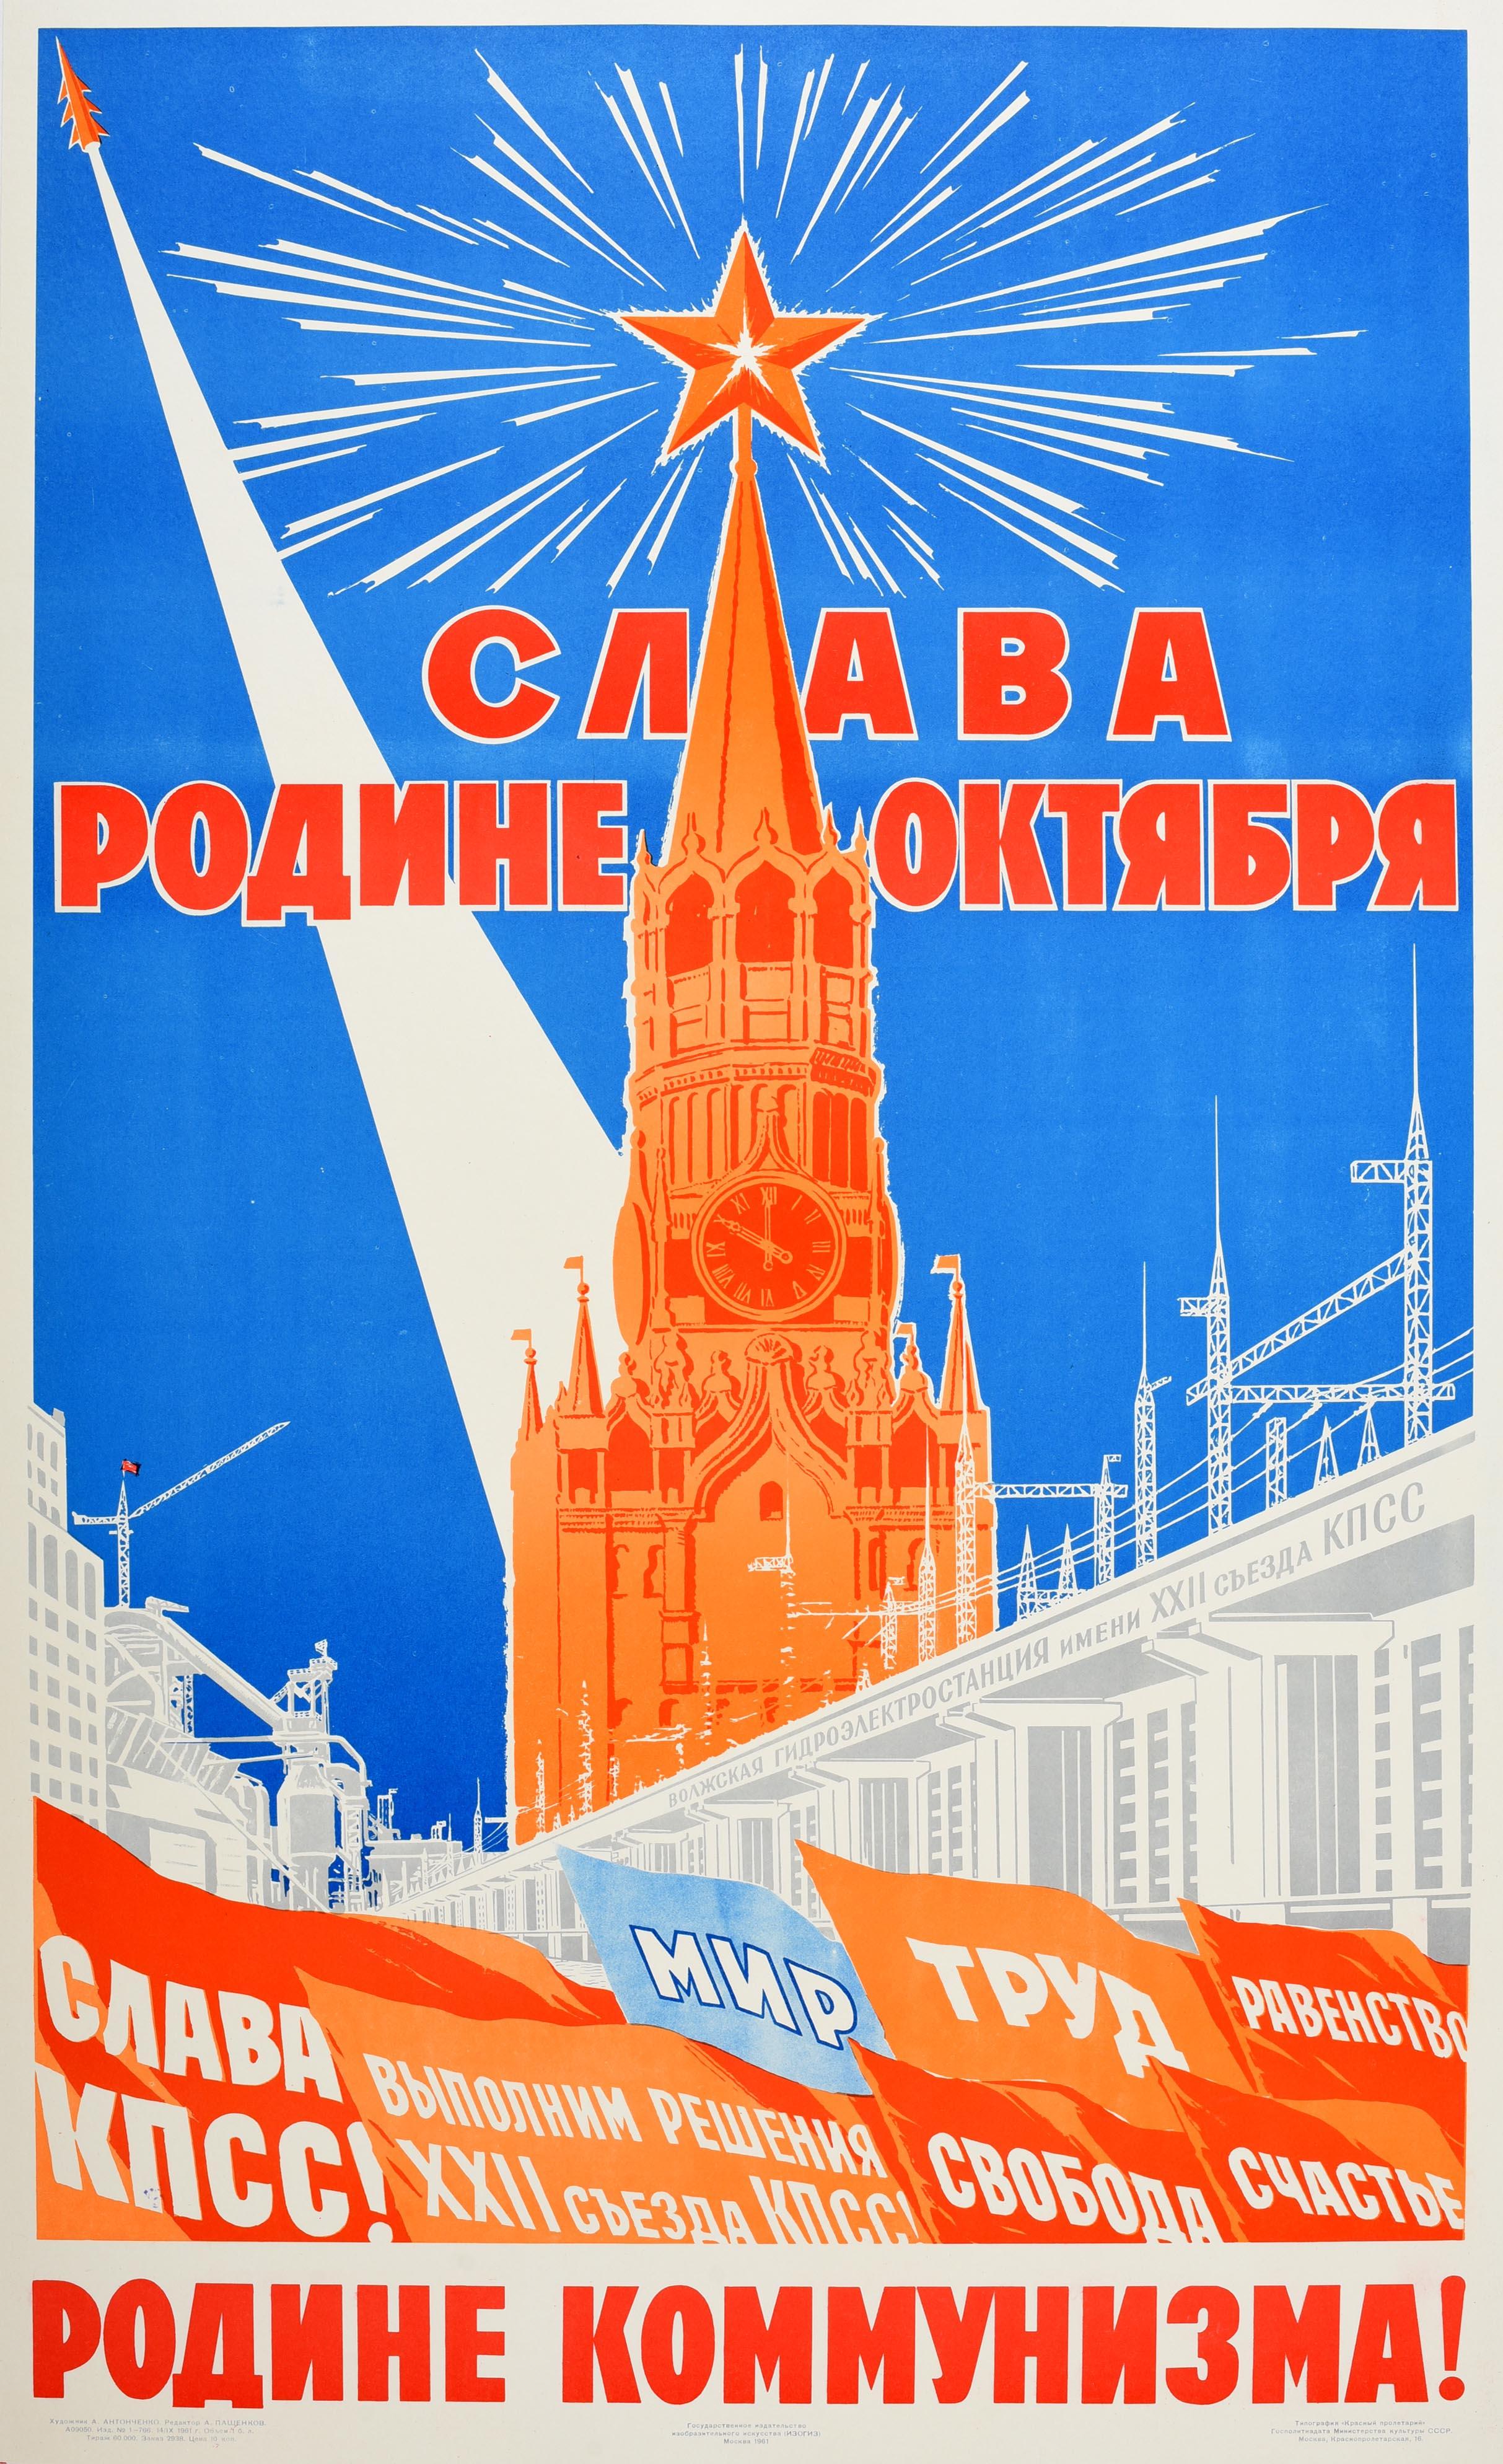 Antonchenko Print - Original Vintage Soviet Poster Motherland Glory Communism USSR Kremlin Rocket